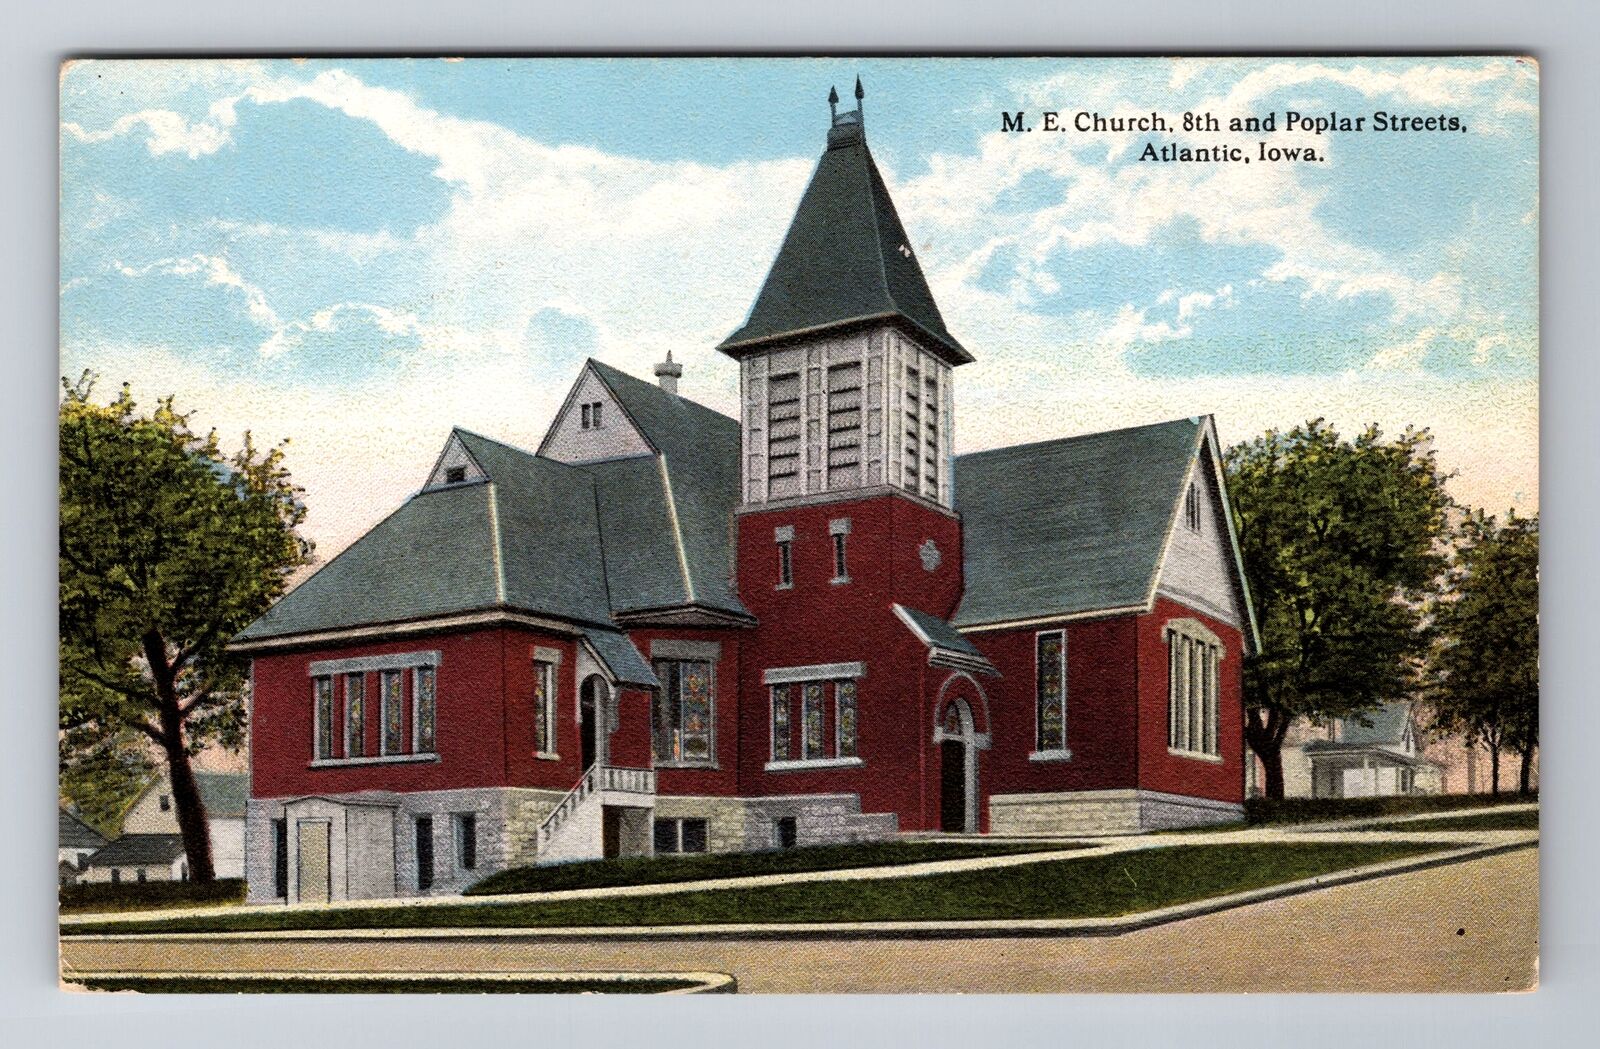 Atlantic IA-Iowa, ME Church, Religion, Antique, Vintage Souvenir Postcard